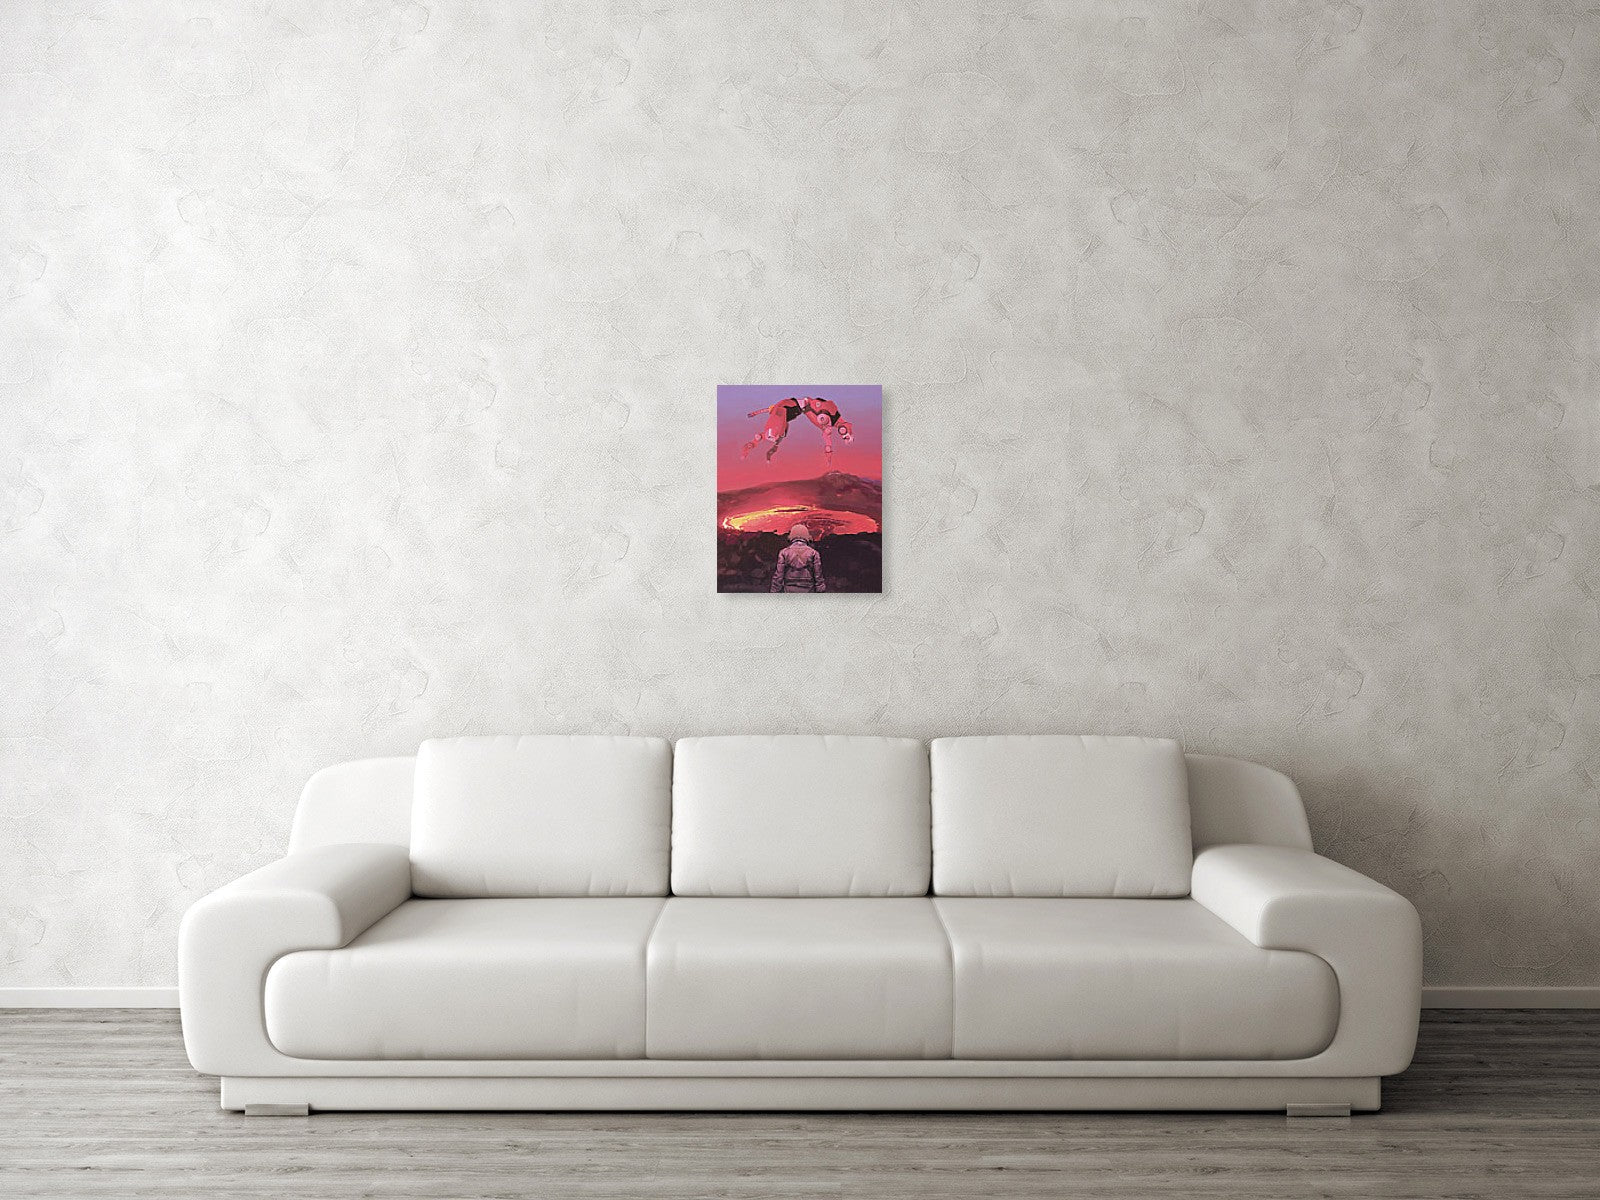 Red Lion Art Print Canvas And Poster, Warm Home Decor Wall Art Visual Art 1617268383959.jpg